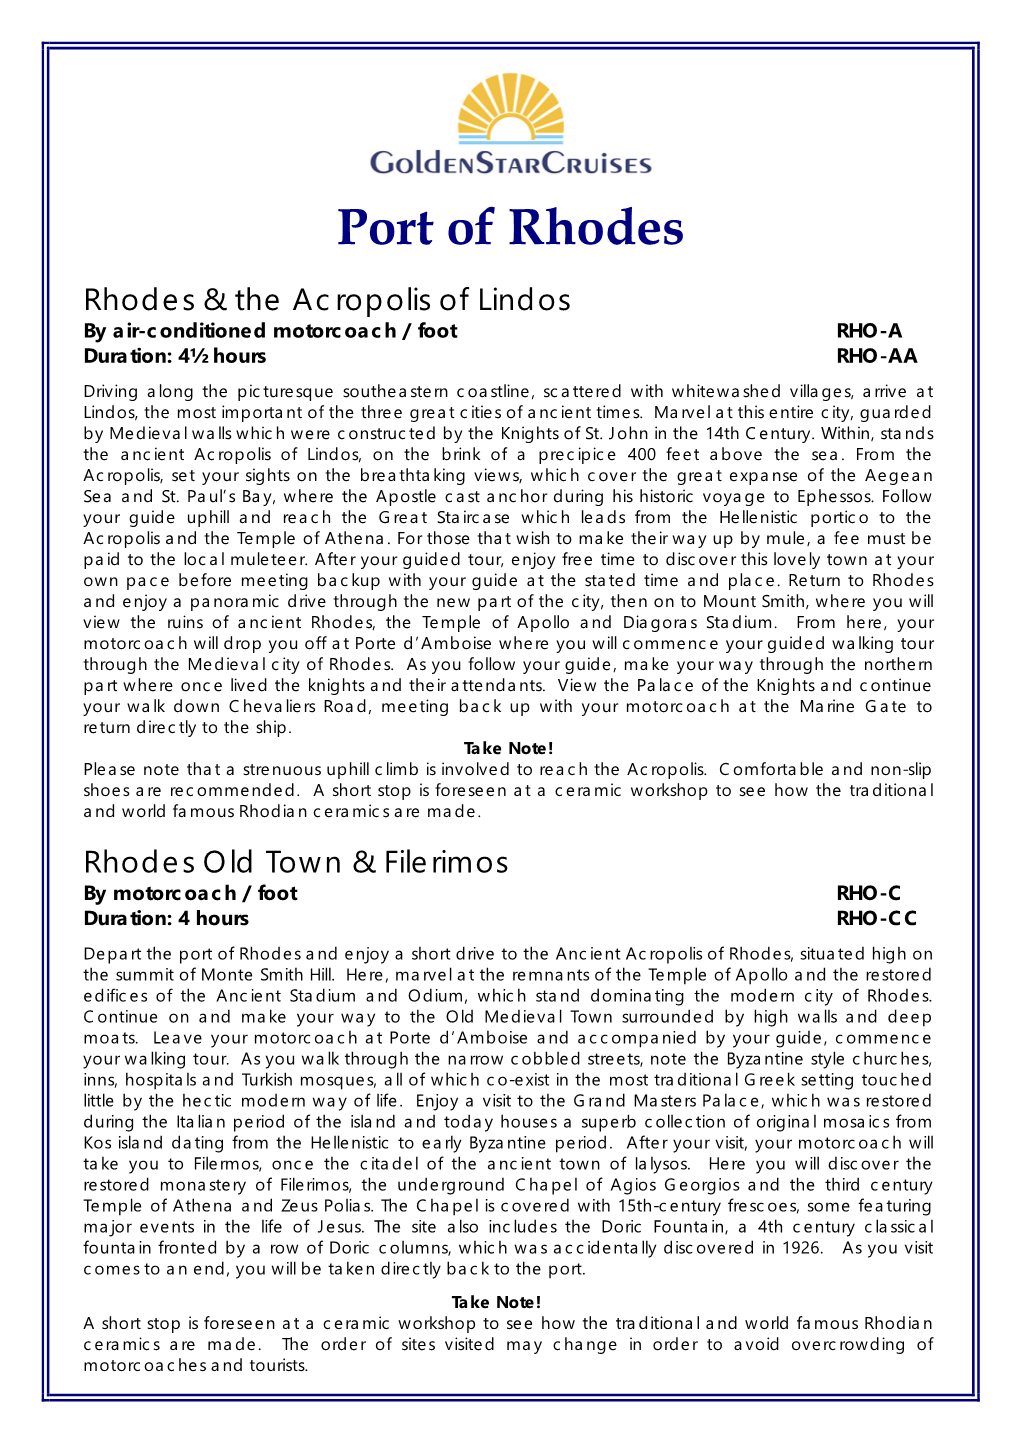 Description About Port Or Rhodes, Port of Kusadasi, Port of Patmos